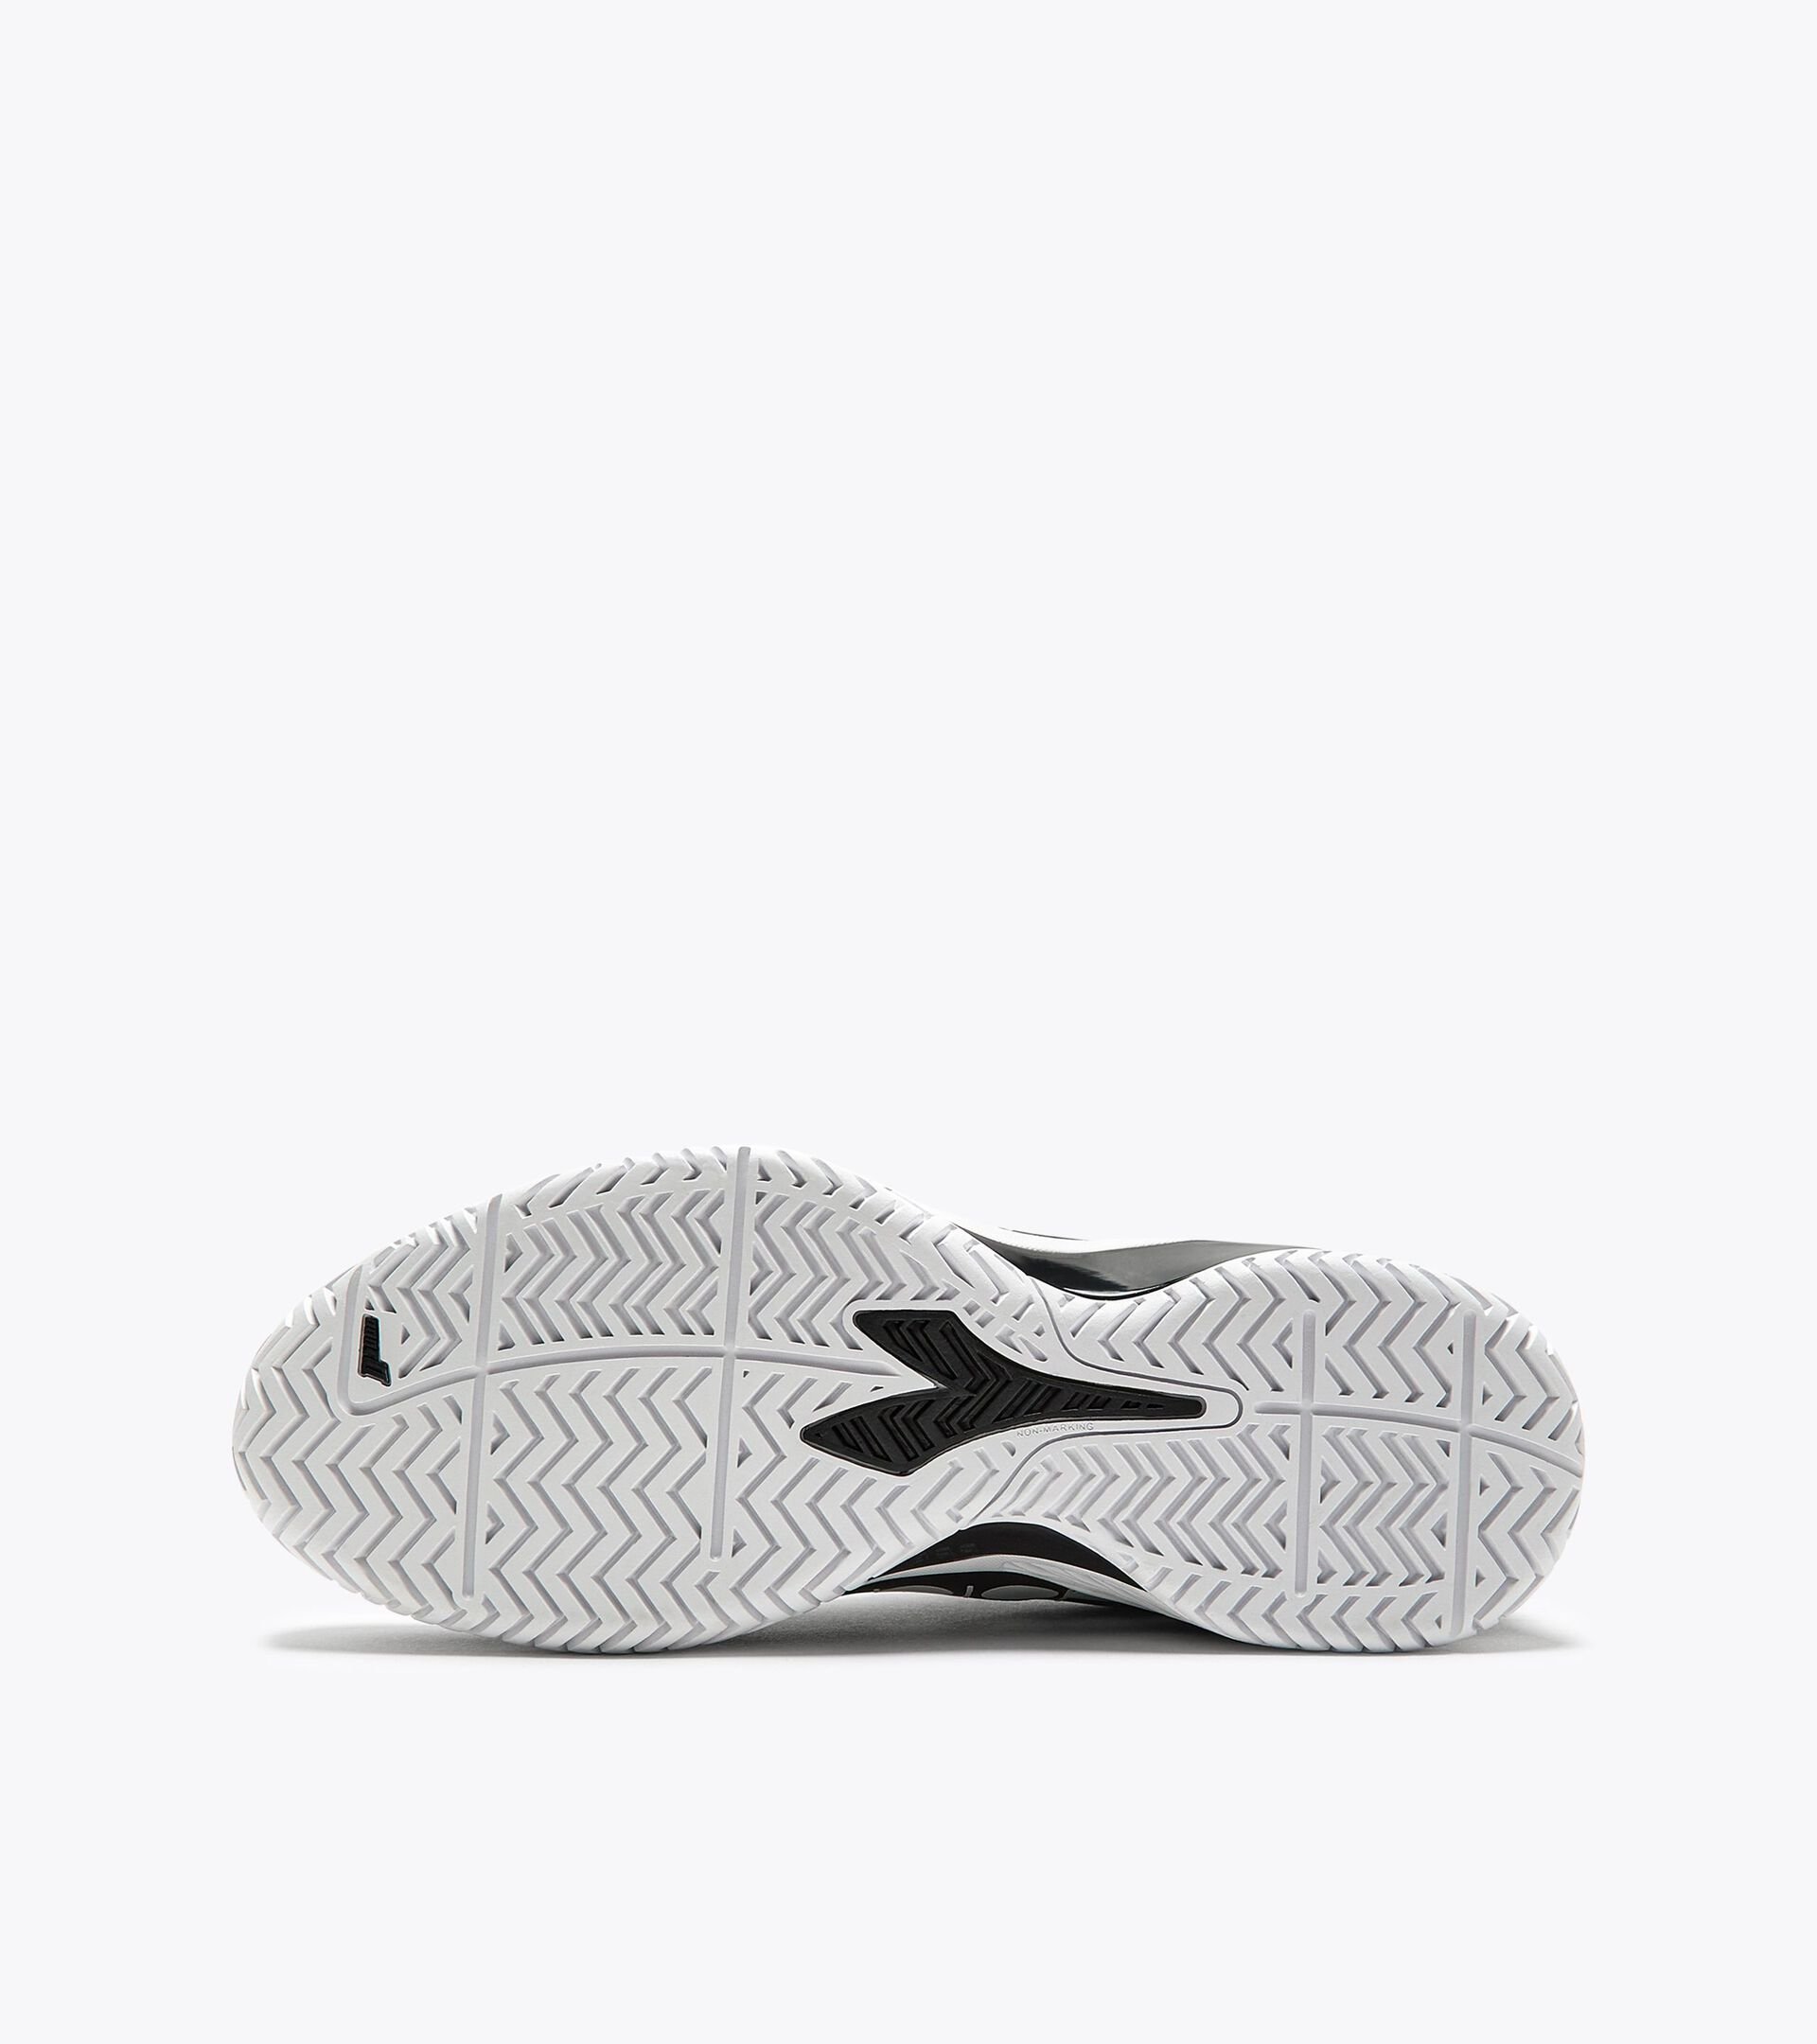 Tennis shoes for hard surfaces or clay - Men BLUSHIELD TORNEO 2 AG BLACK/WHITE (C7406) - Diadora